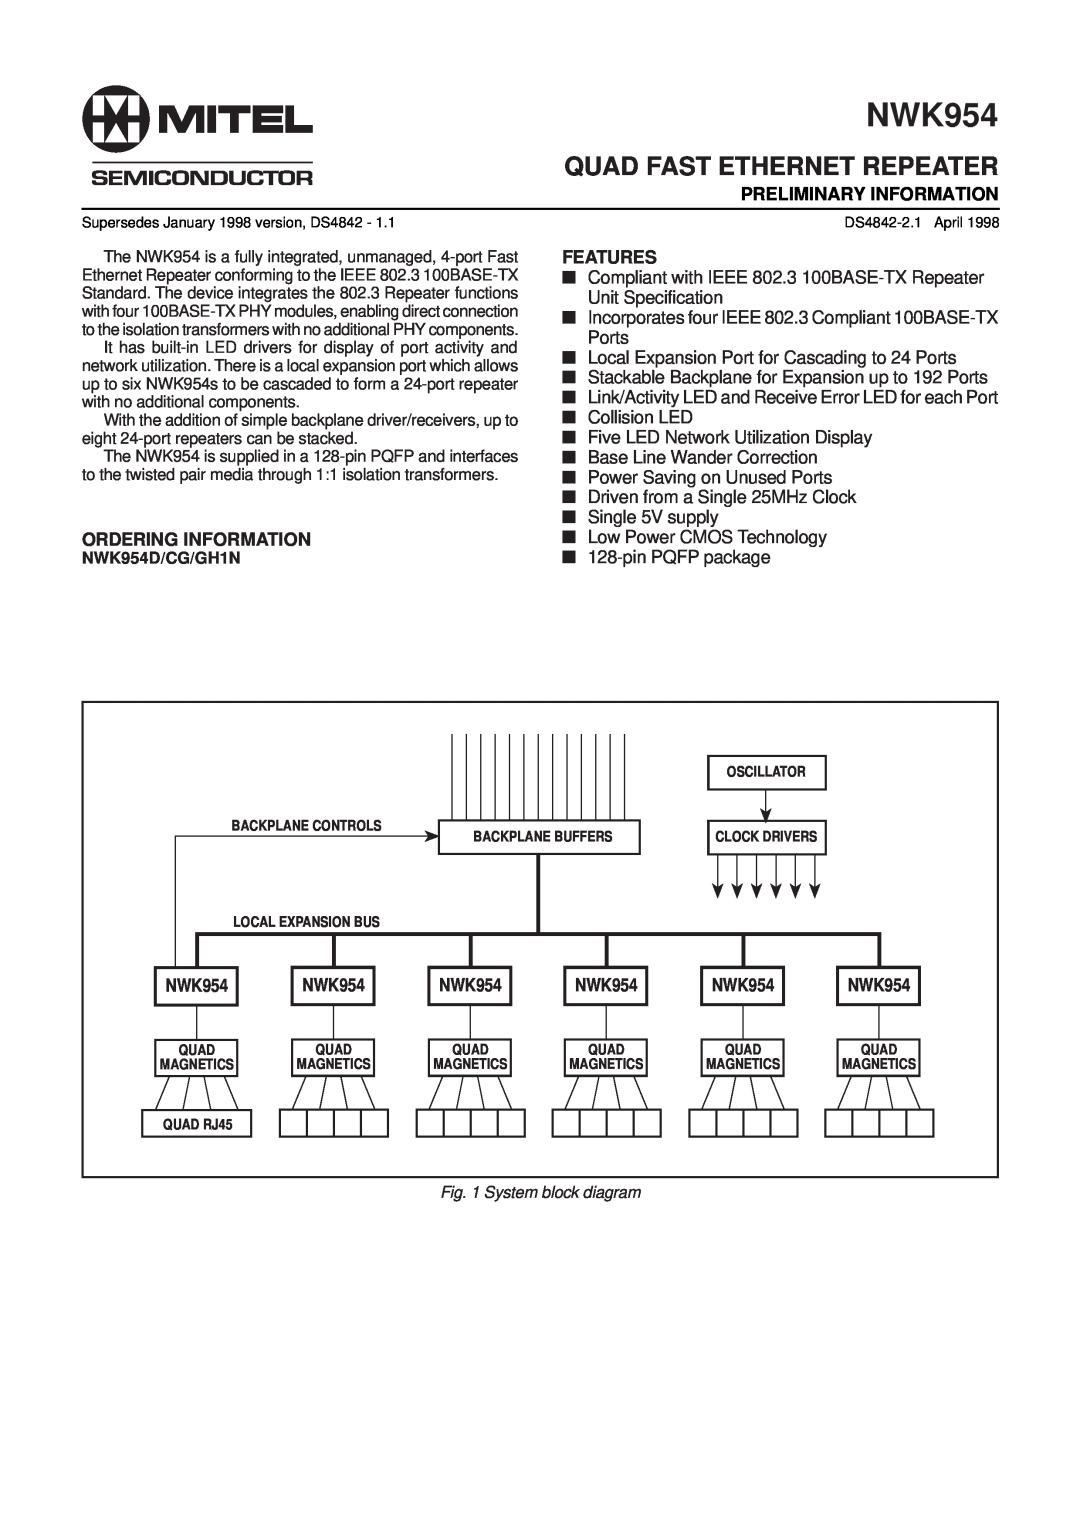 Mitel NWK954 manual Preliminary Information, Ordering Information, Features, System block diagram 